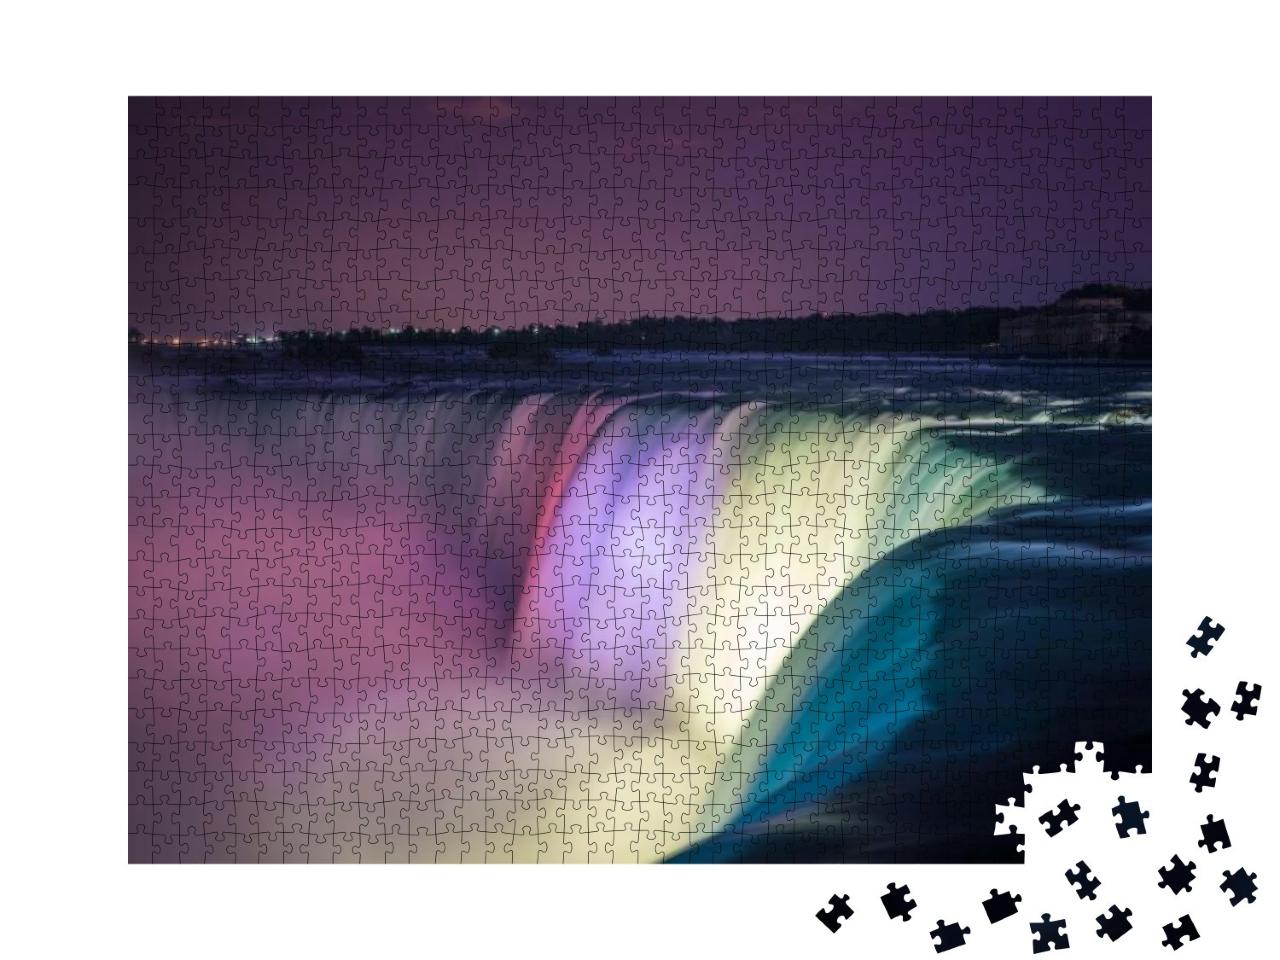 Niagara Falls At Night... Jigsaw Puzzle with 1000 pieces